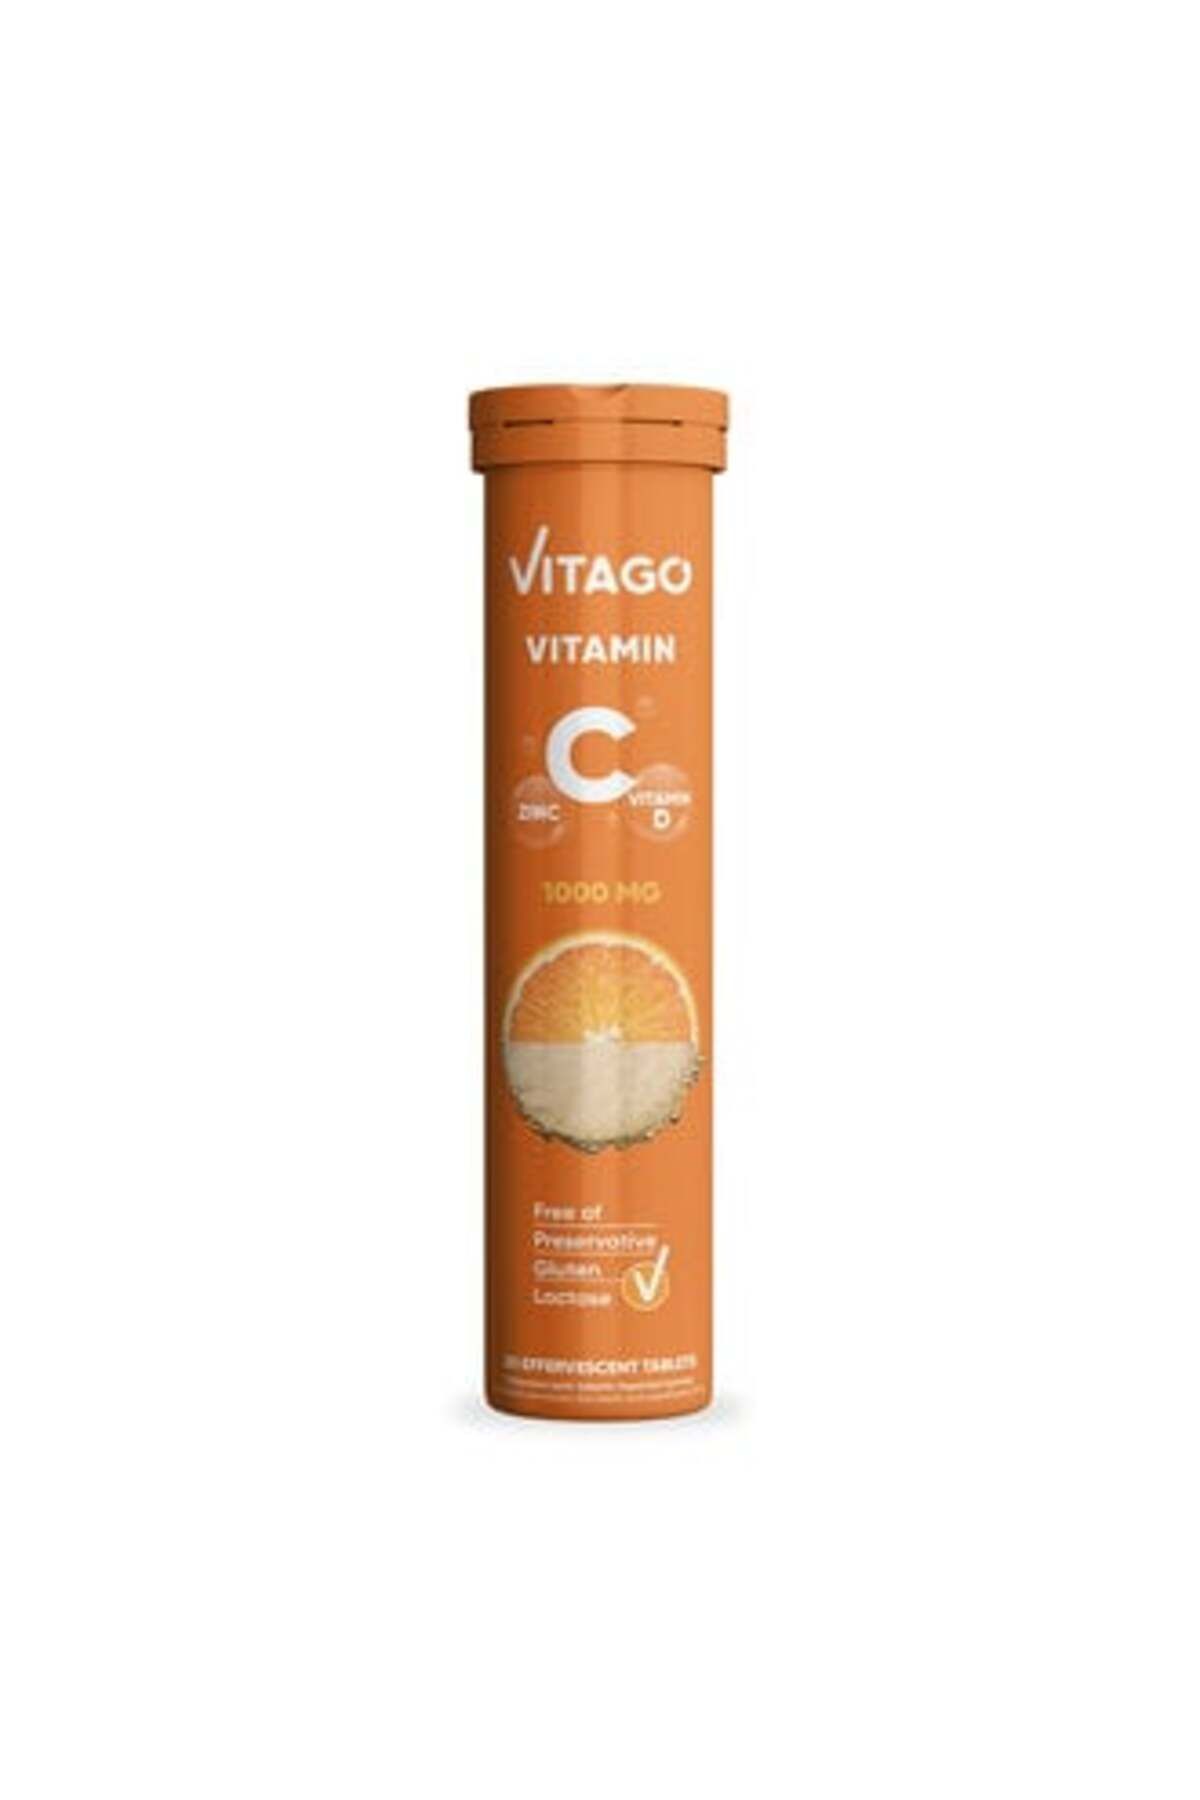 Vitago Vitamin C+ Vitamin D+ Çinko 20'li Efervesan Tablet 70g ( 2 ADET )